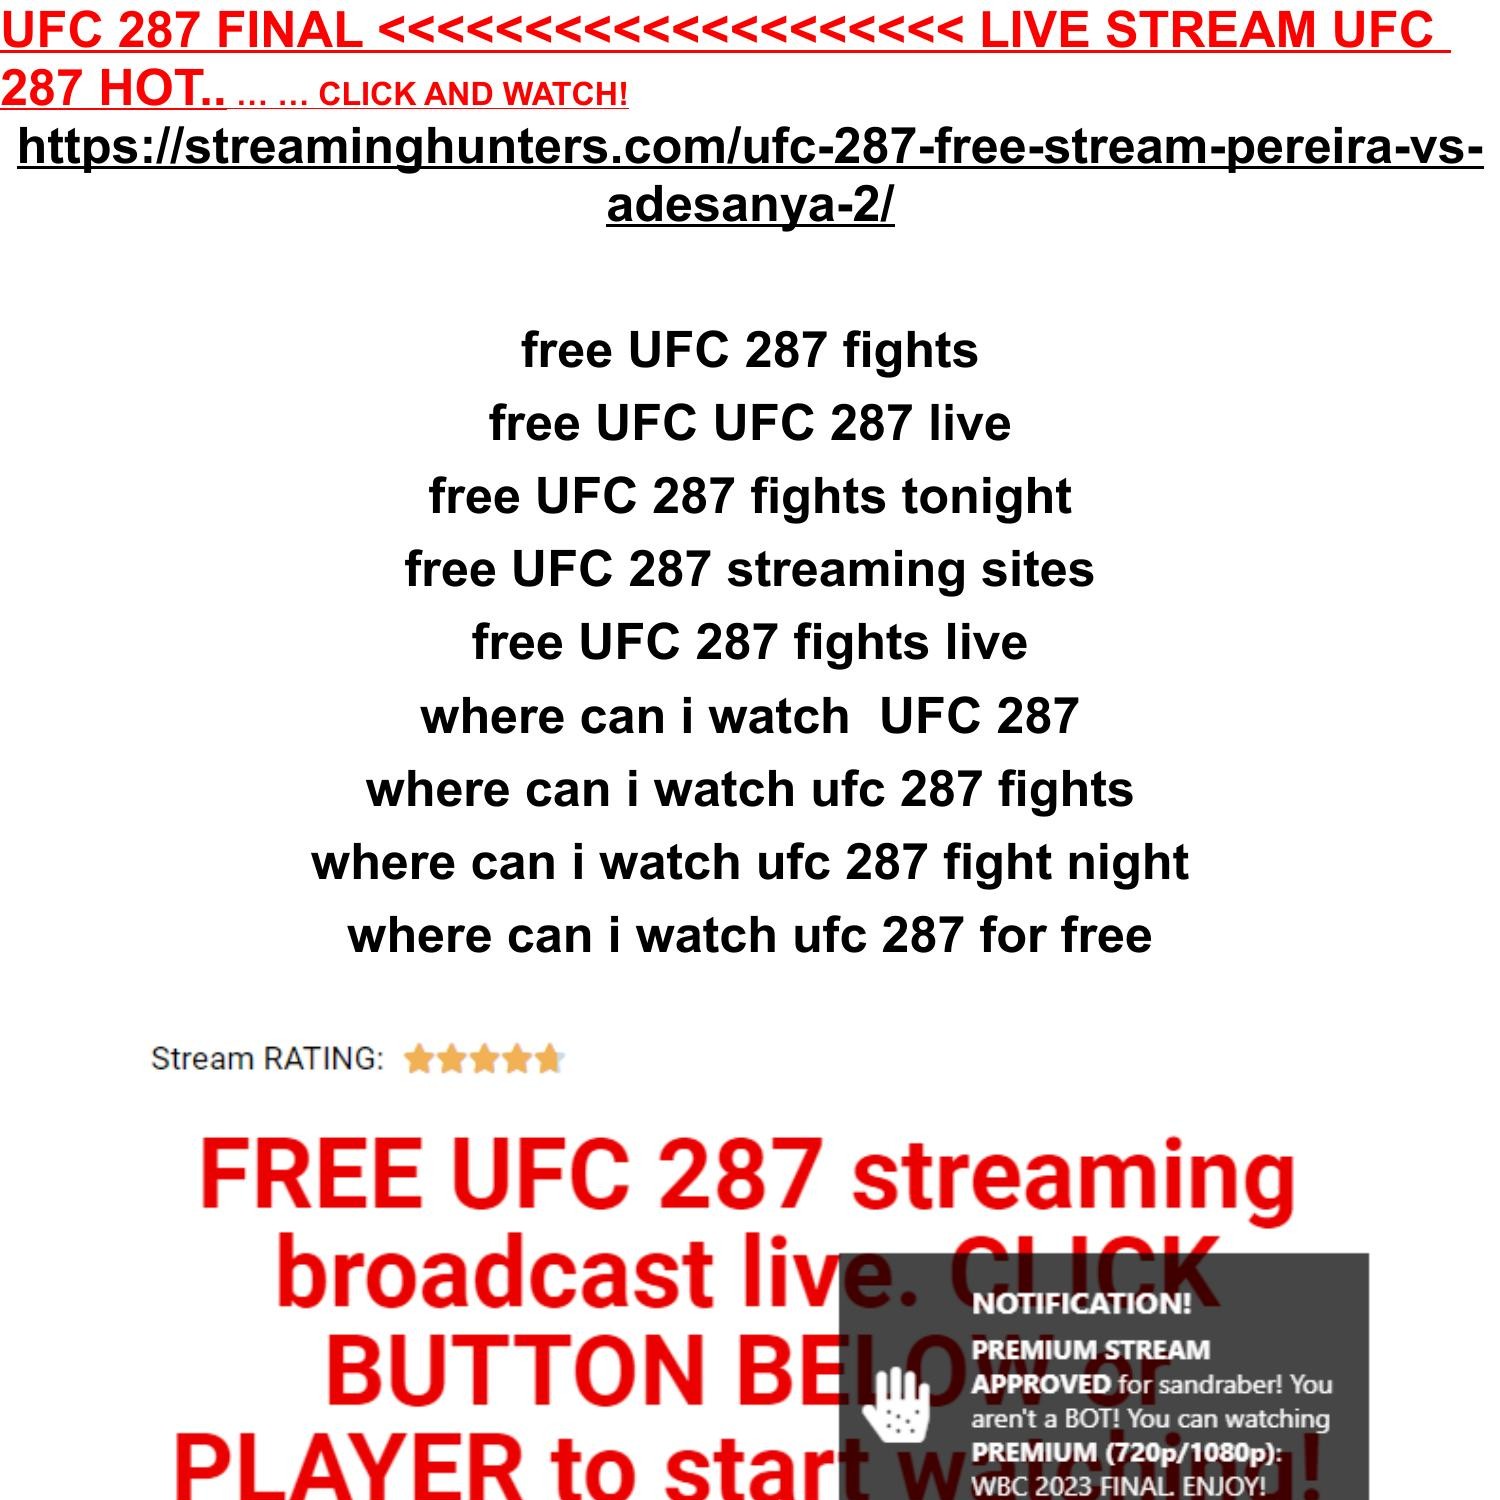 FREE UFC 287 STREAMING HD PREMIUM.pdf DocDroid